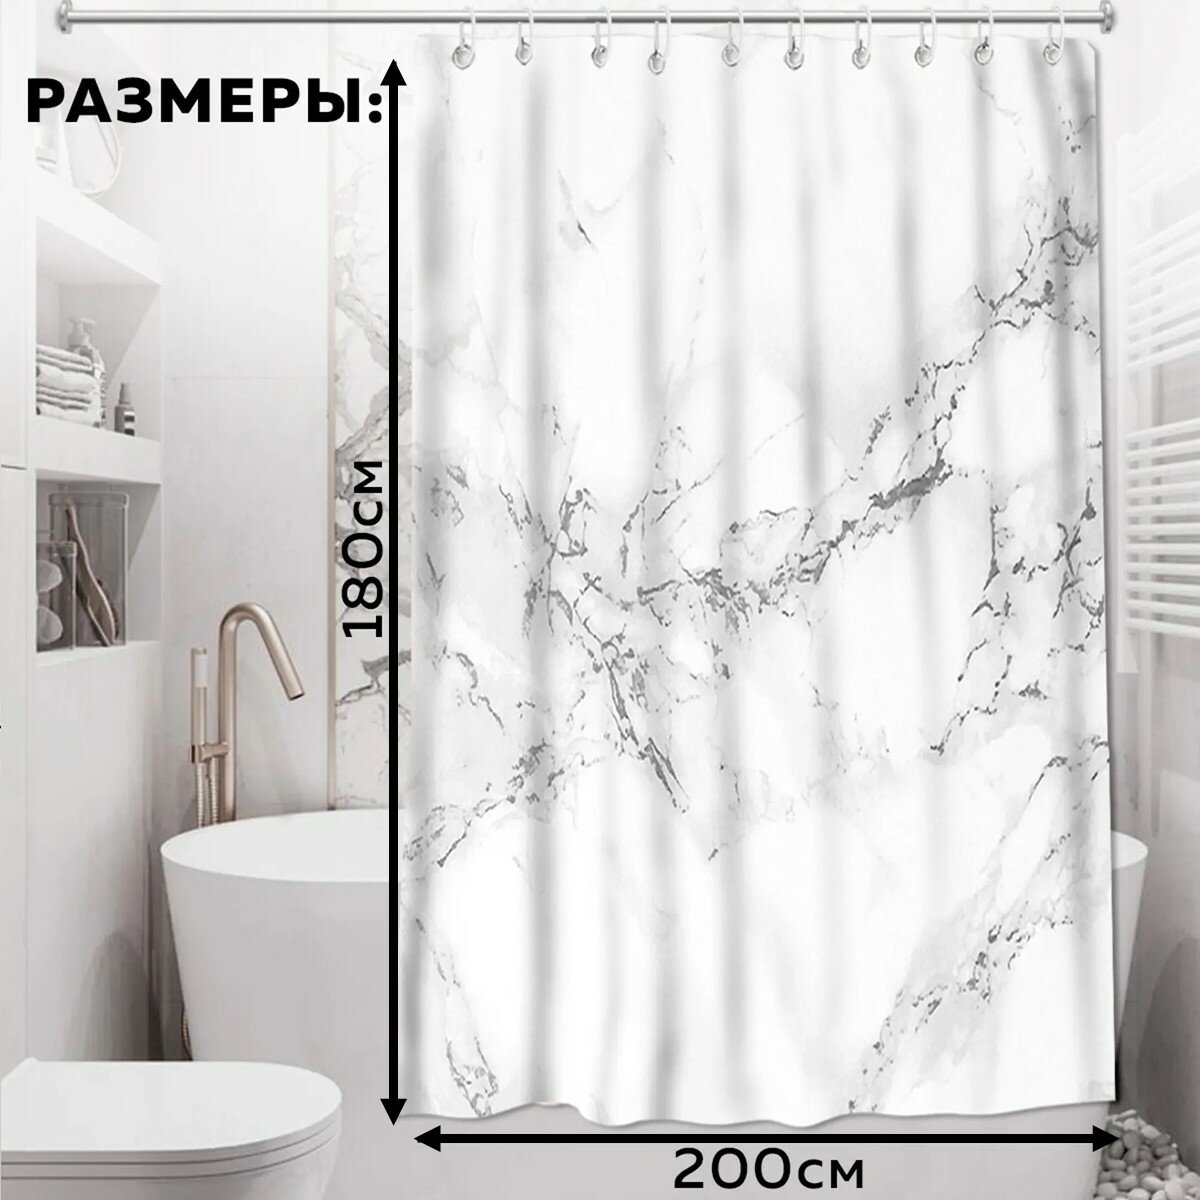 Штора для ванной тканевая Ridberg Marble белая 180х200 см, с кольцами / шторка для душа водоотталкивающая